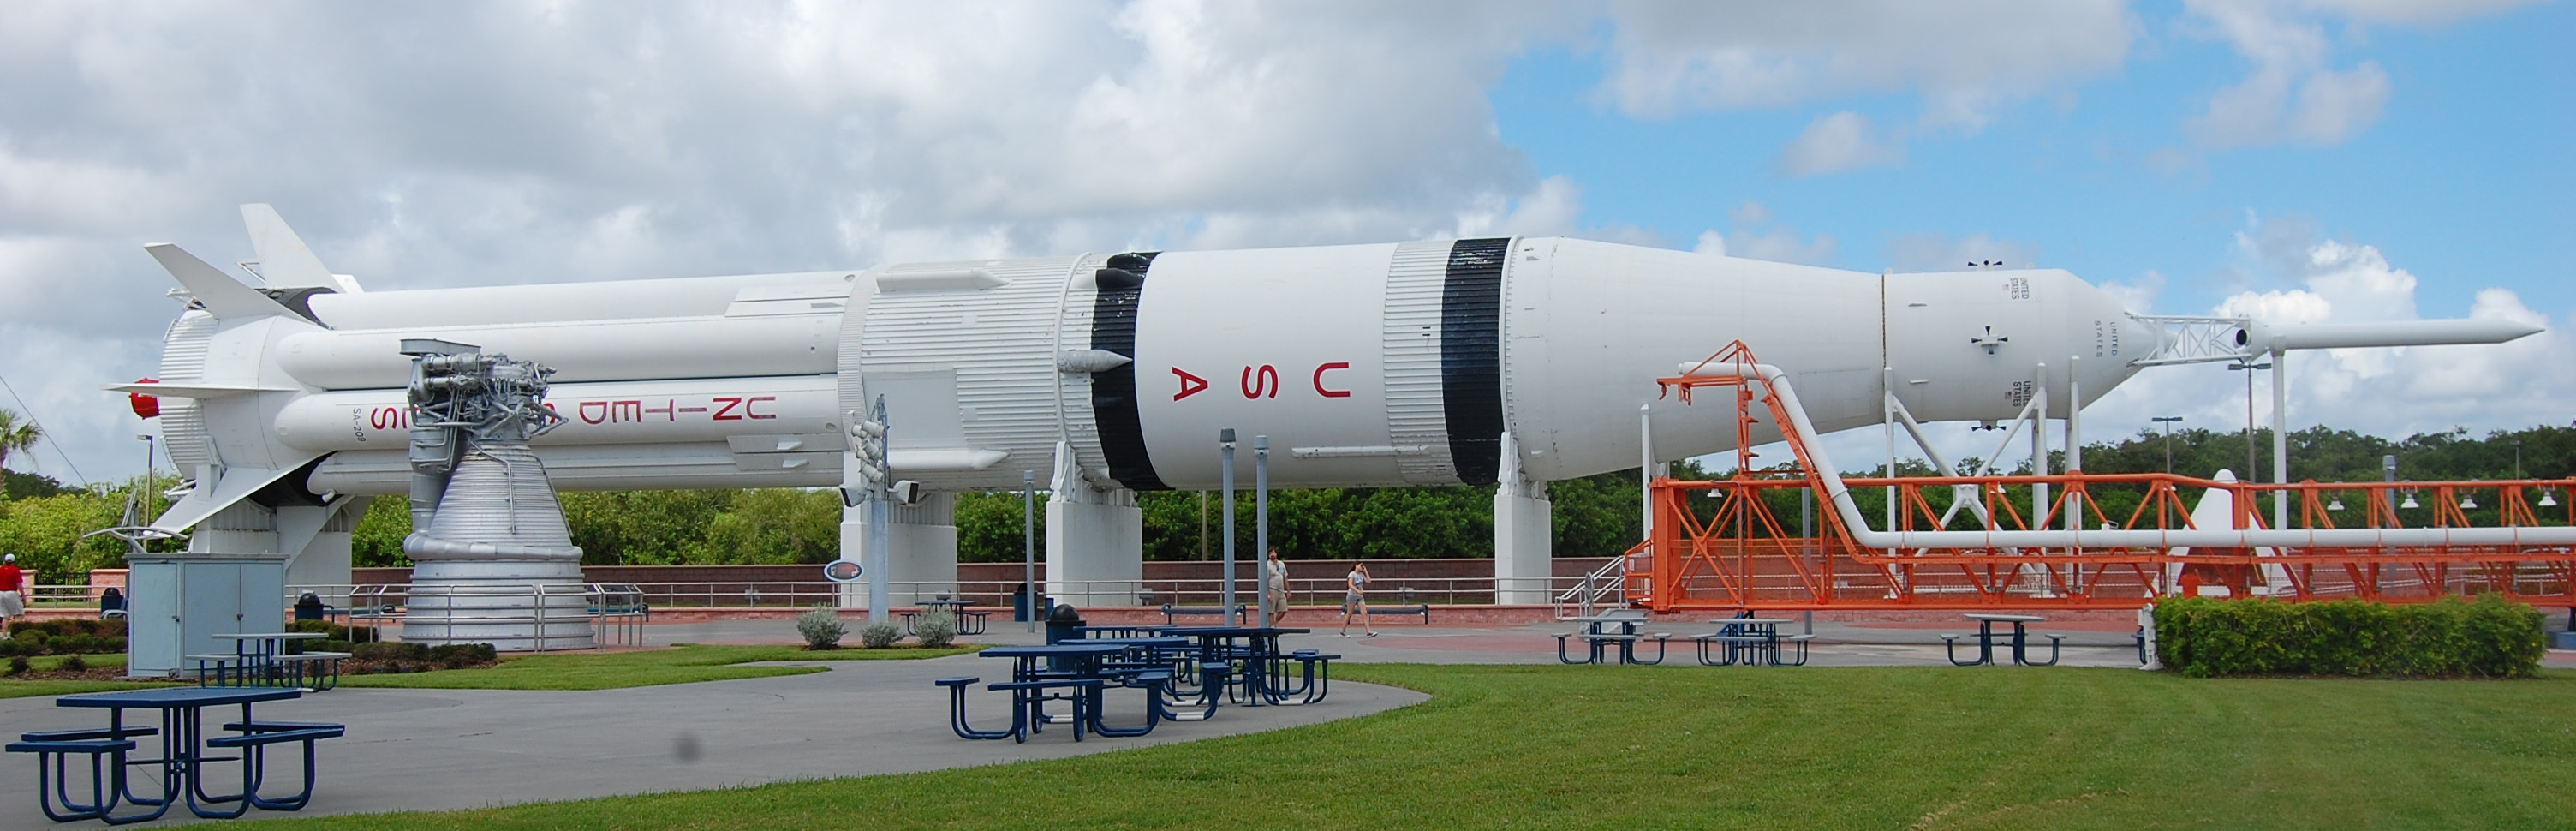 The Skylab 4 SA-209 Saturn IB rocket on display at the Visitor Center’s Rocket Garden at NASA’s Kennedy Space Center in Florida